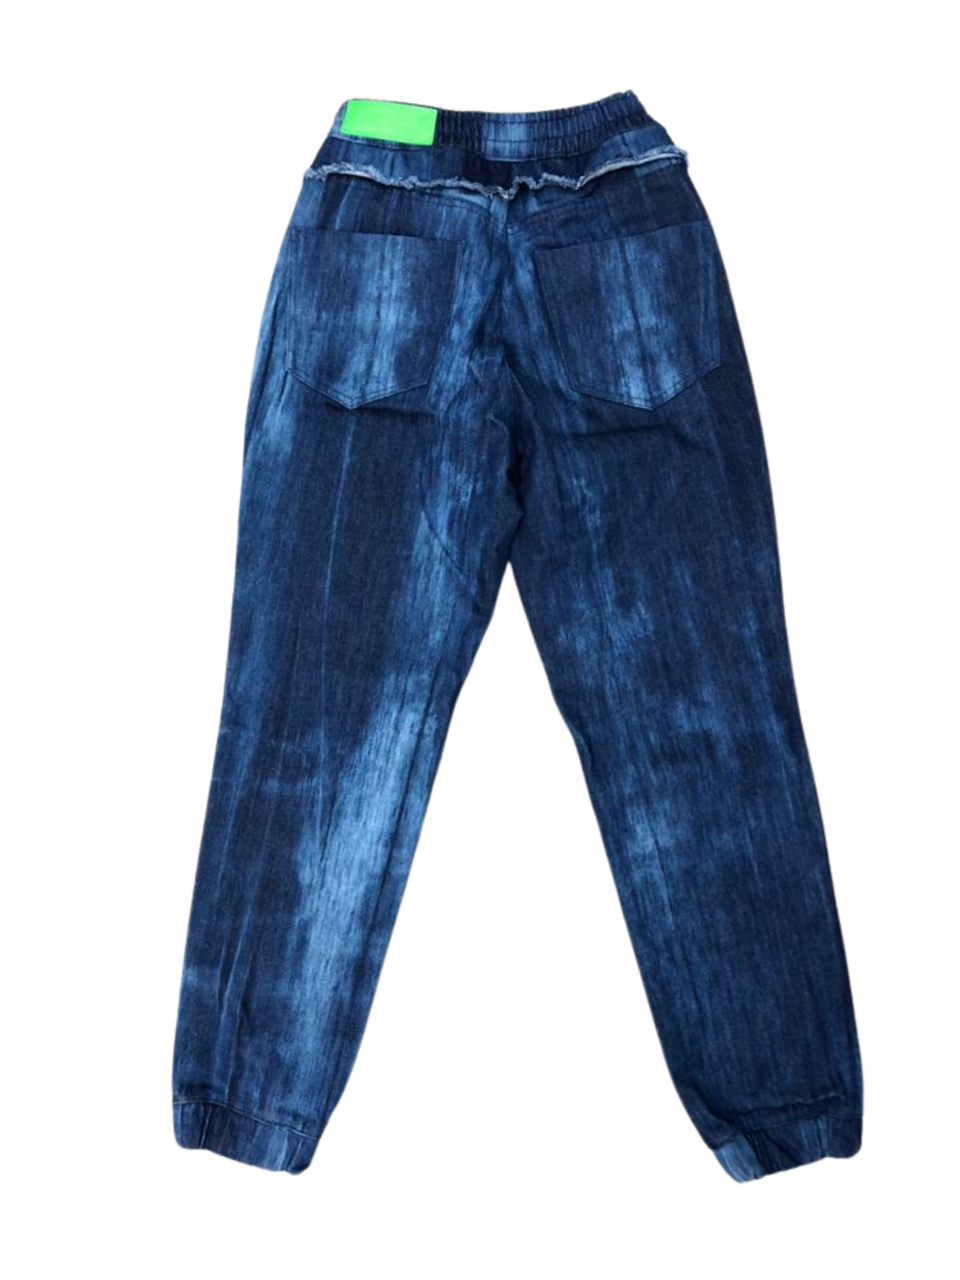 Calça jeans - art denim